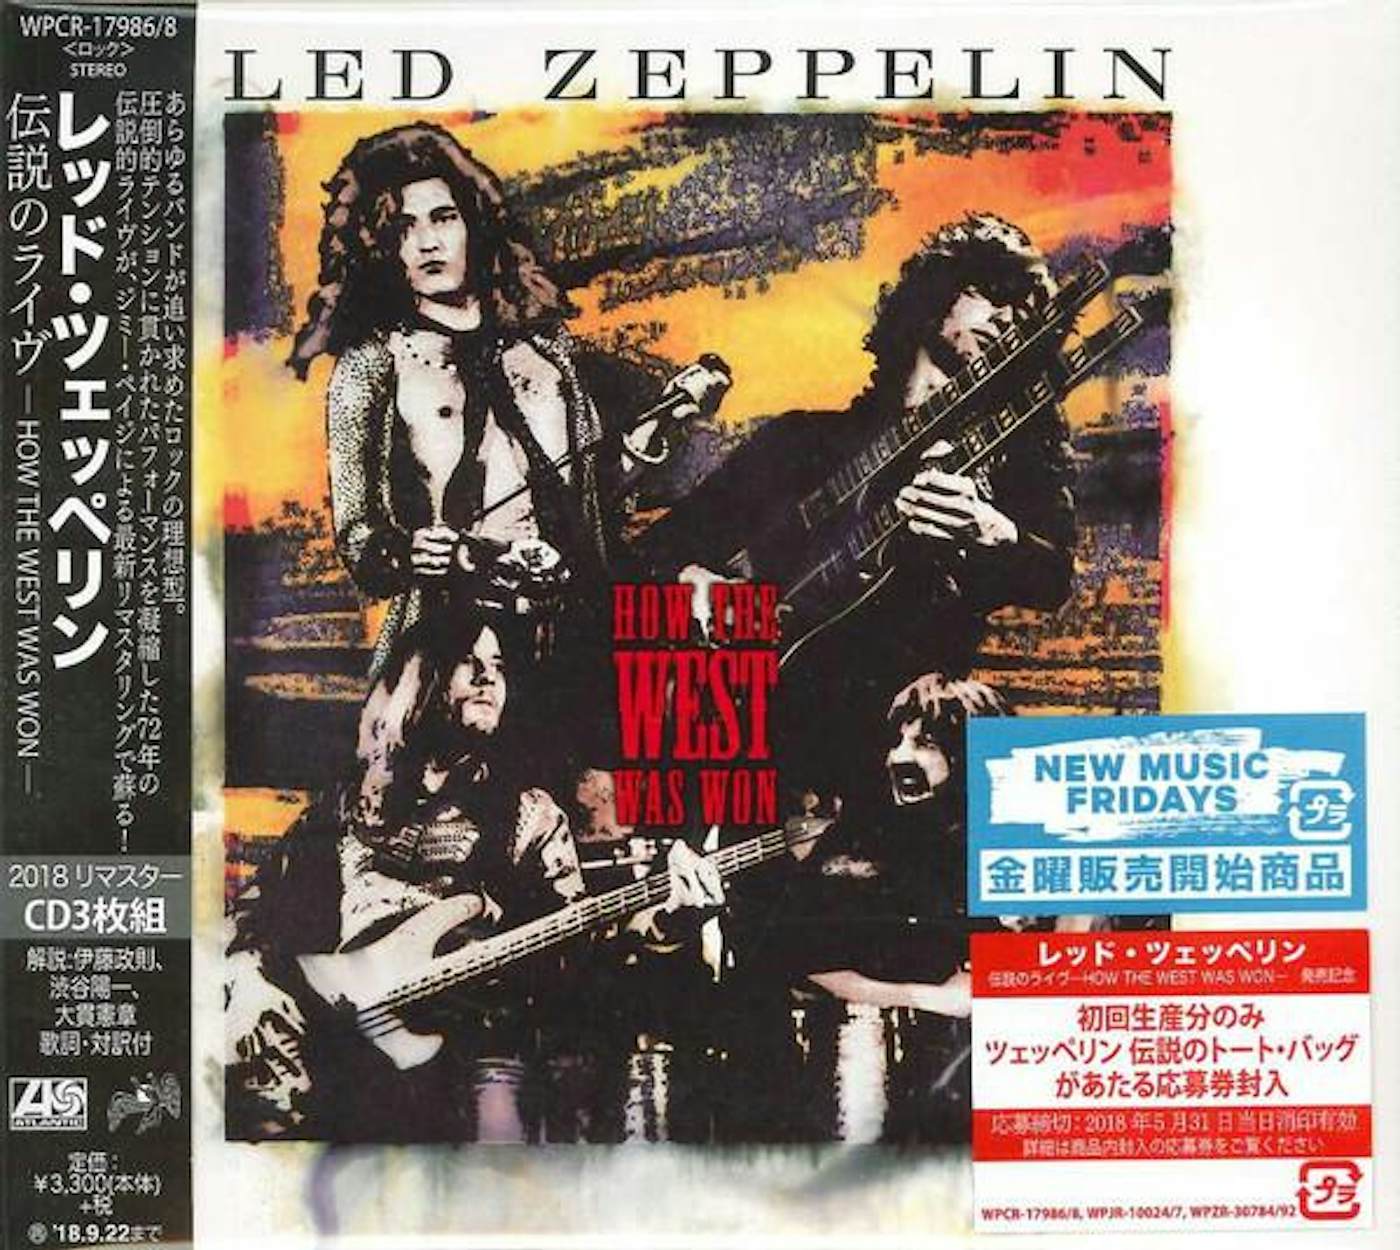 Led Zeppelin - Cd Led Zeppelin Ii (Cd Original Remasterizado)